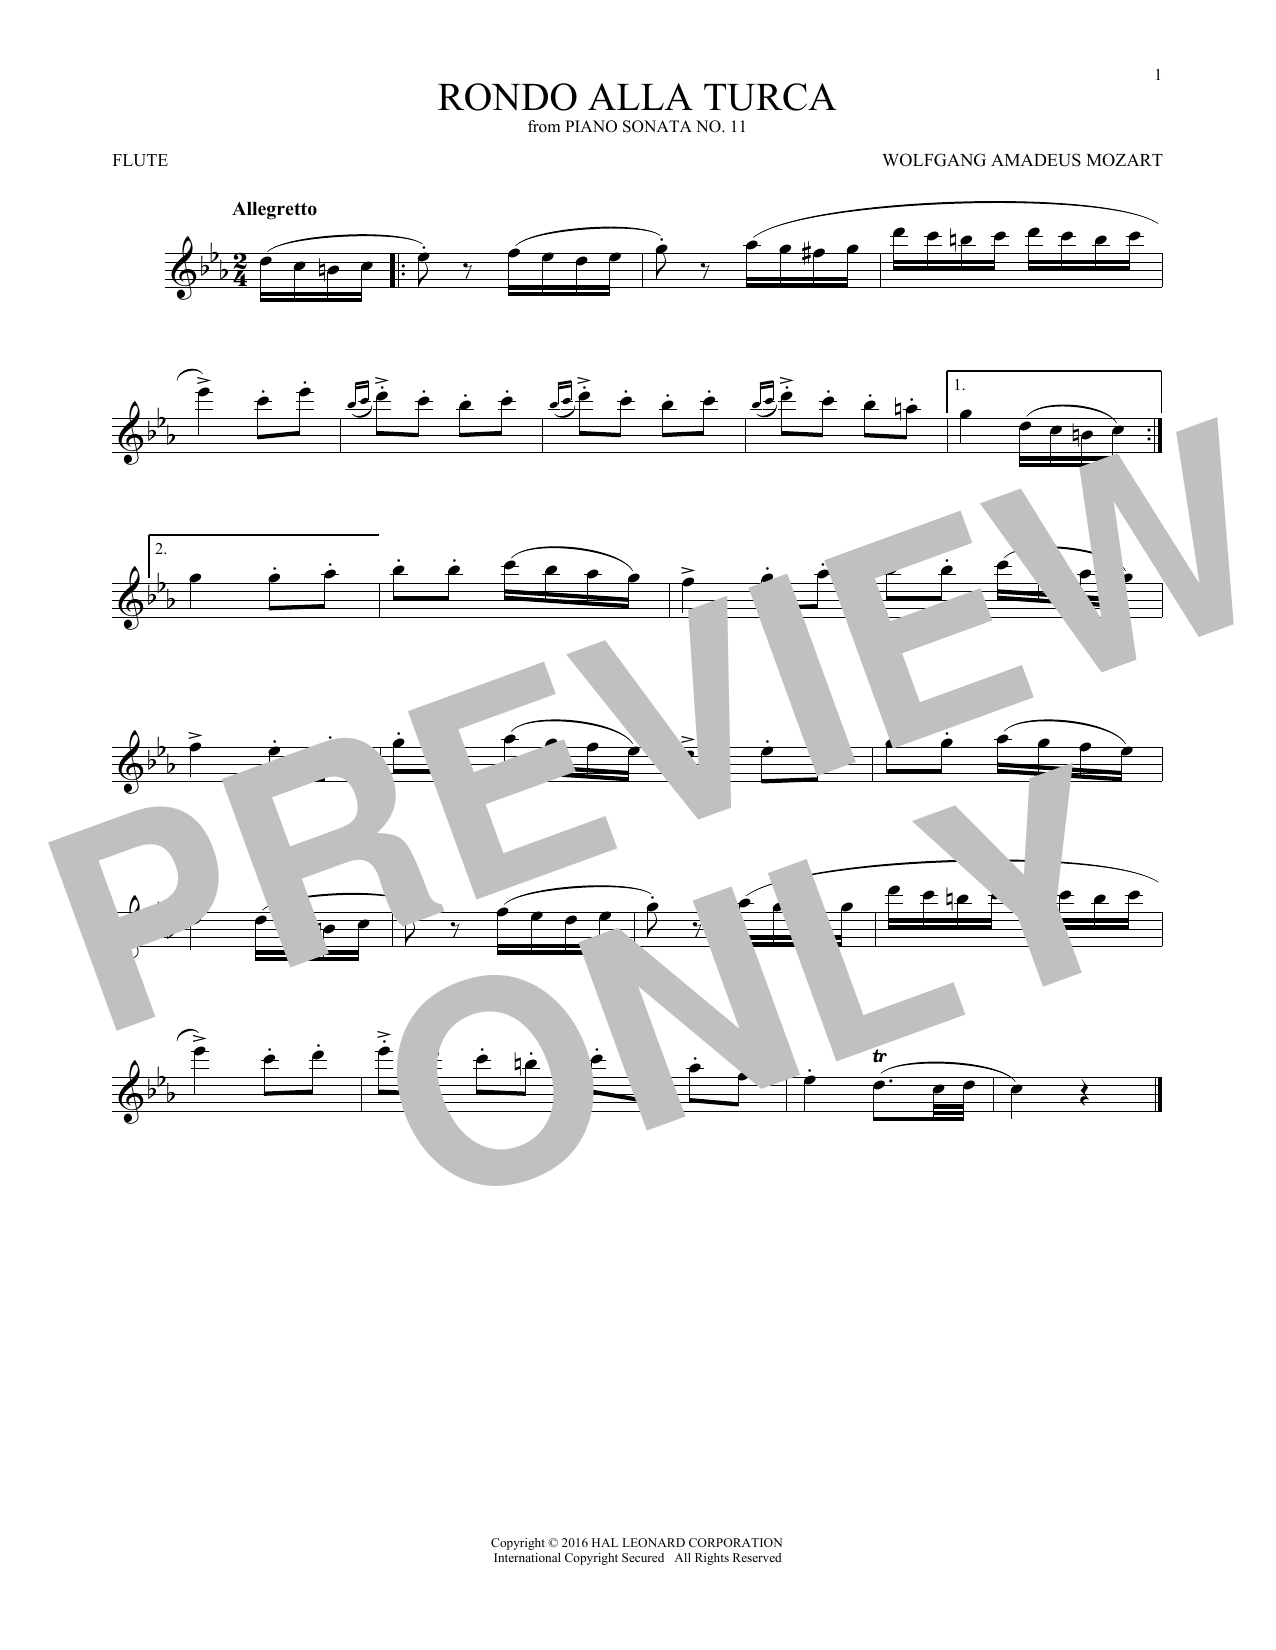 Wolfgang Amadeus Mozart Rondo Alla Turca Sheet Music Notes & Chords for Alto Saxophone - Download or Print PDF